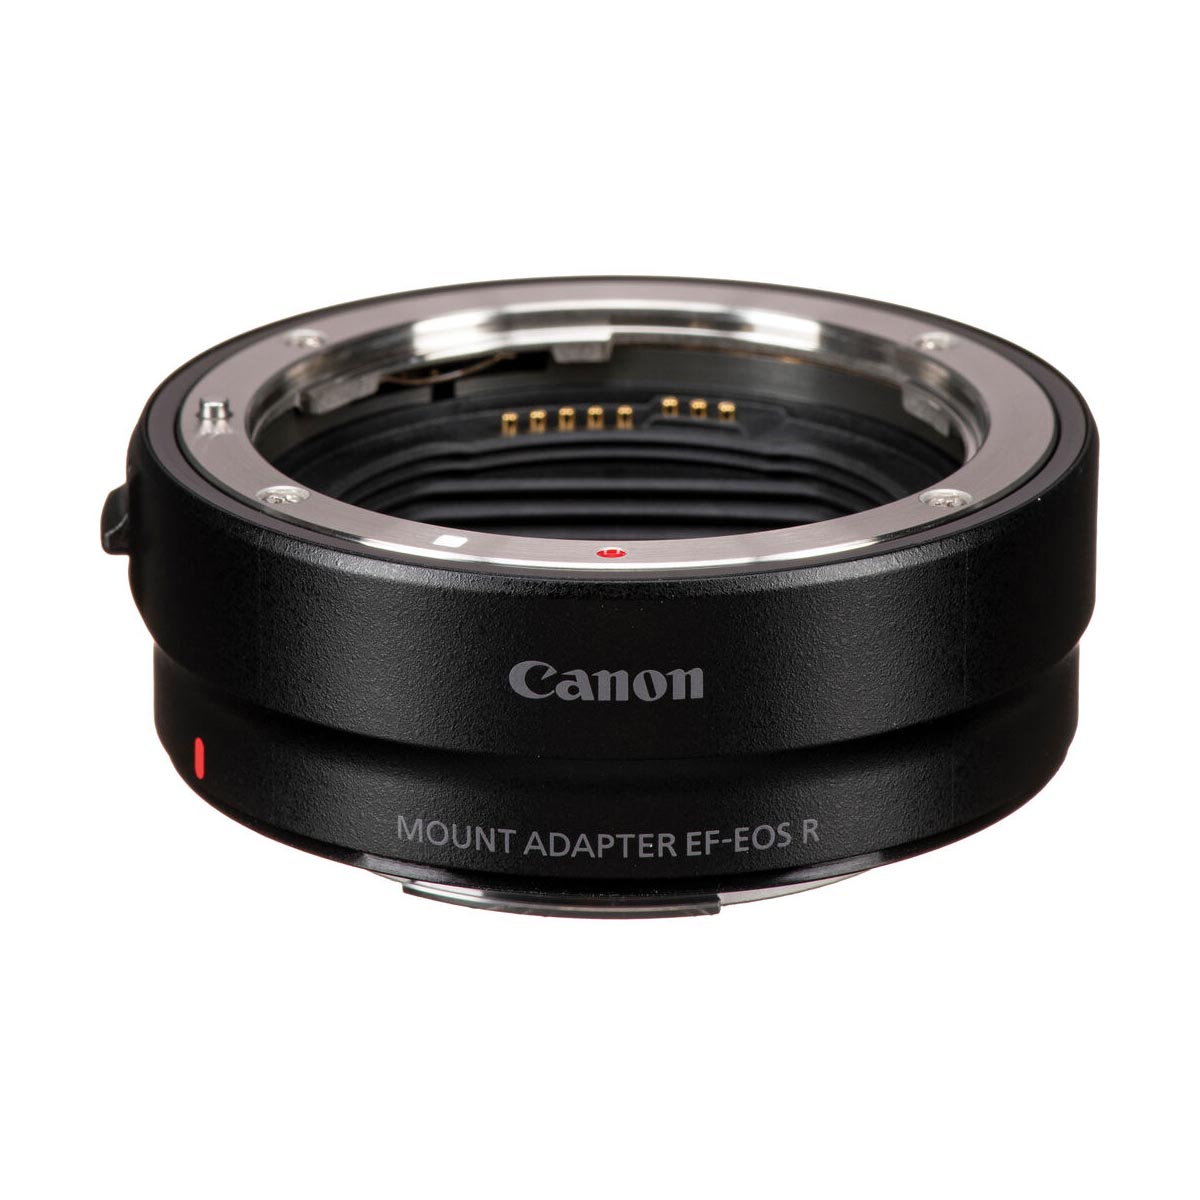 Canon Mount Adapter EF-EOS R - VideoKing EU Store